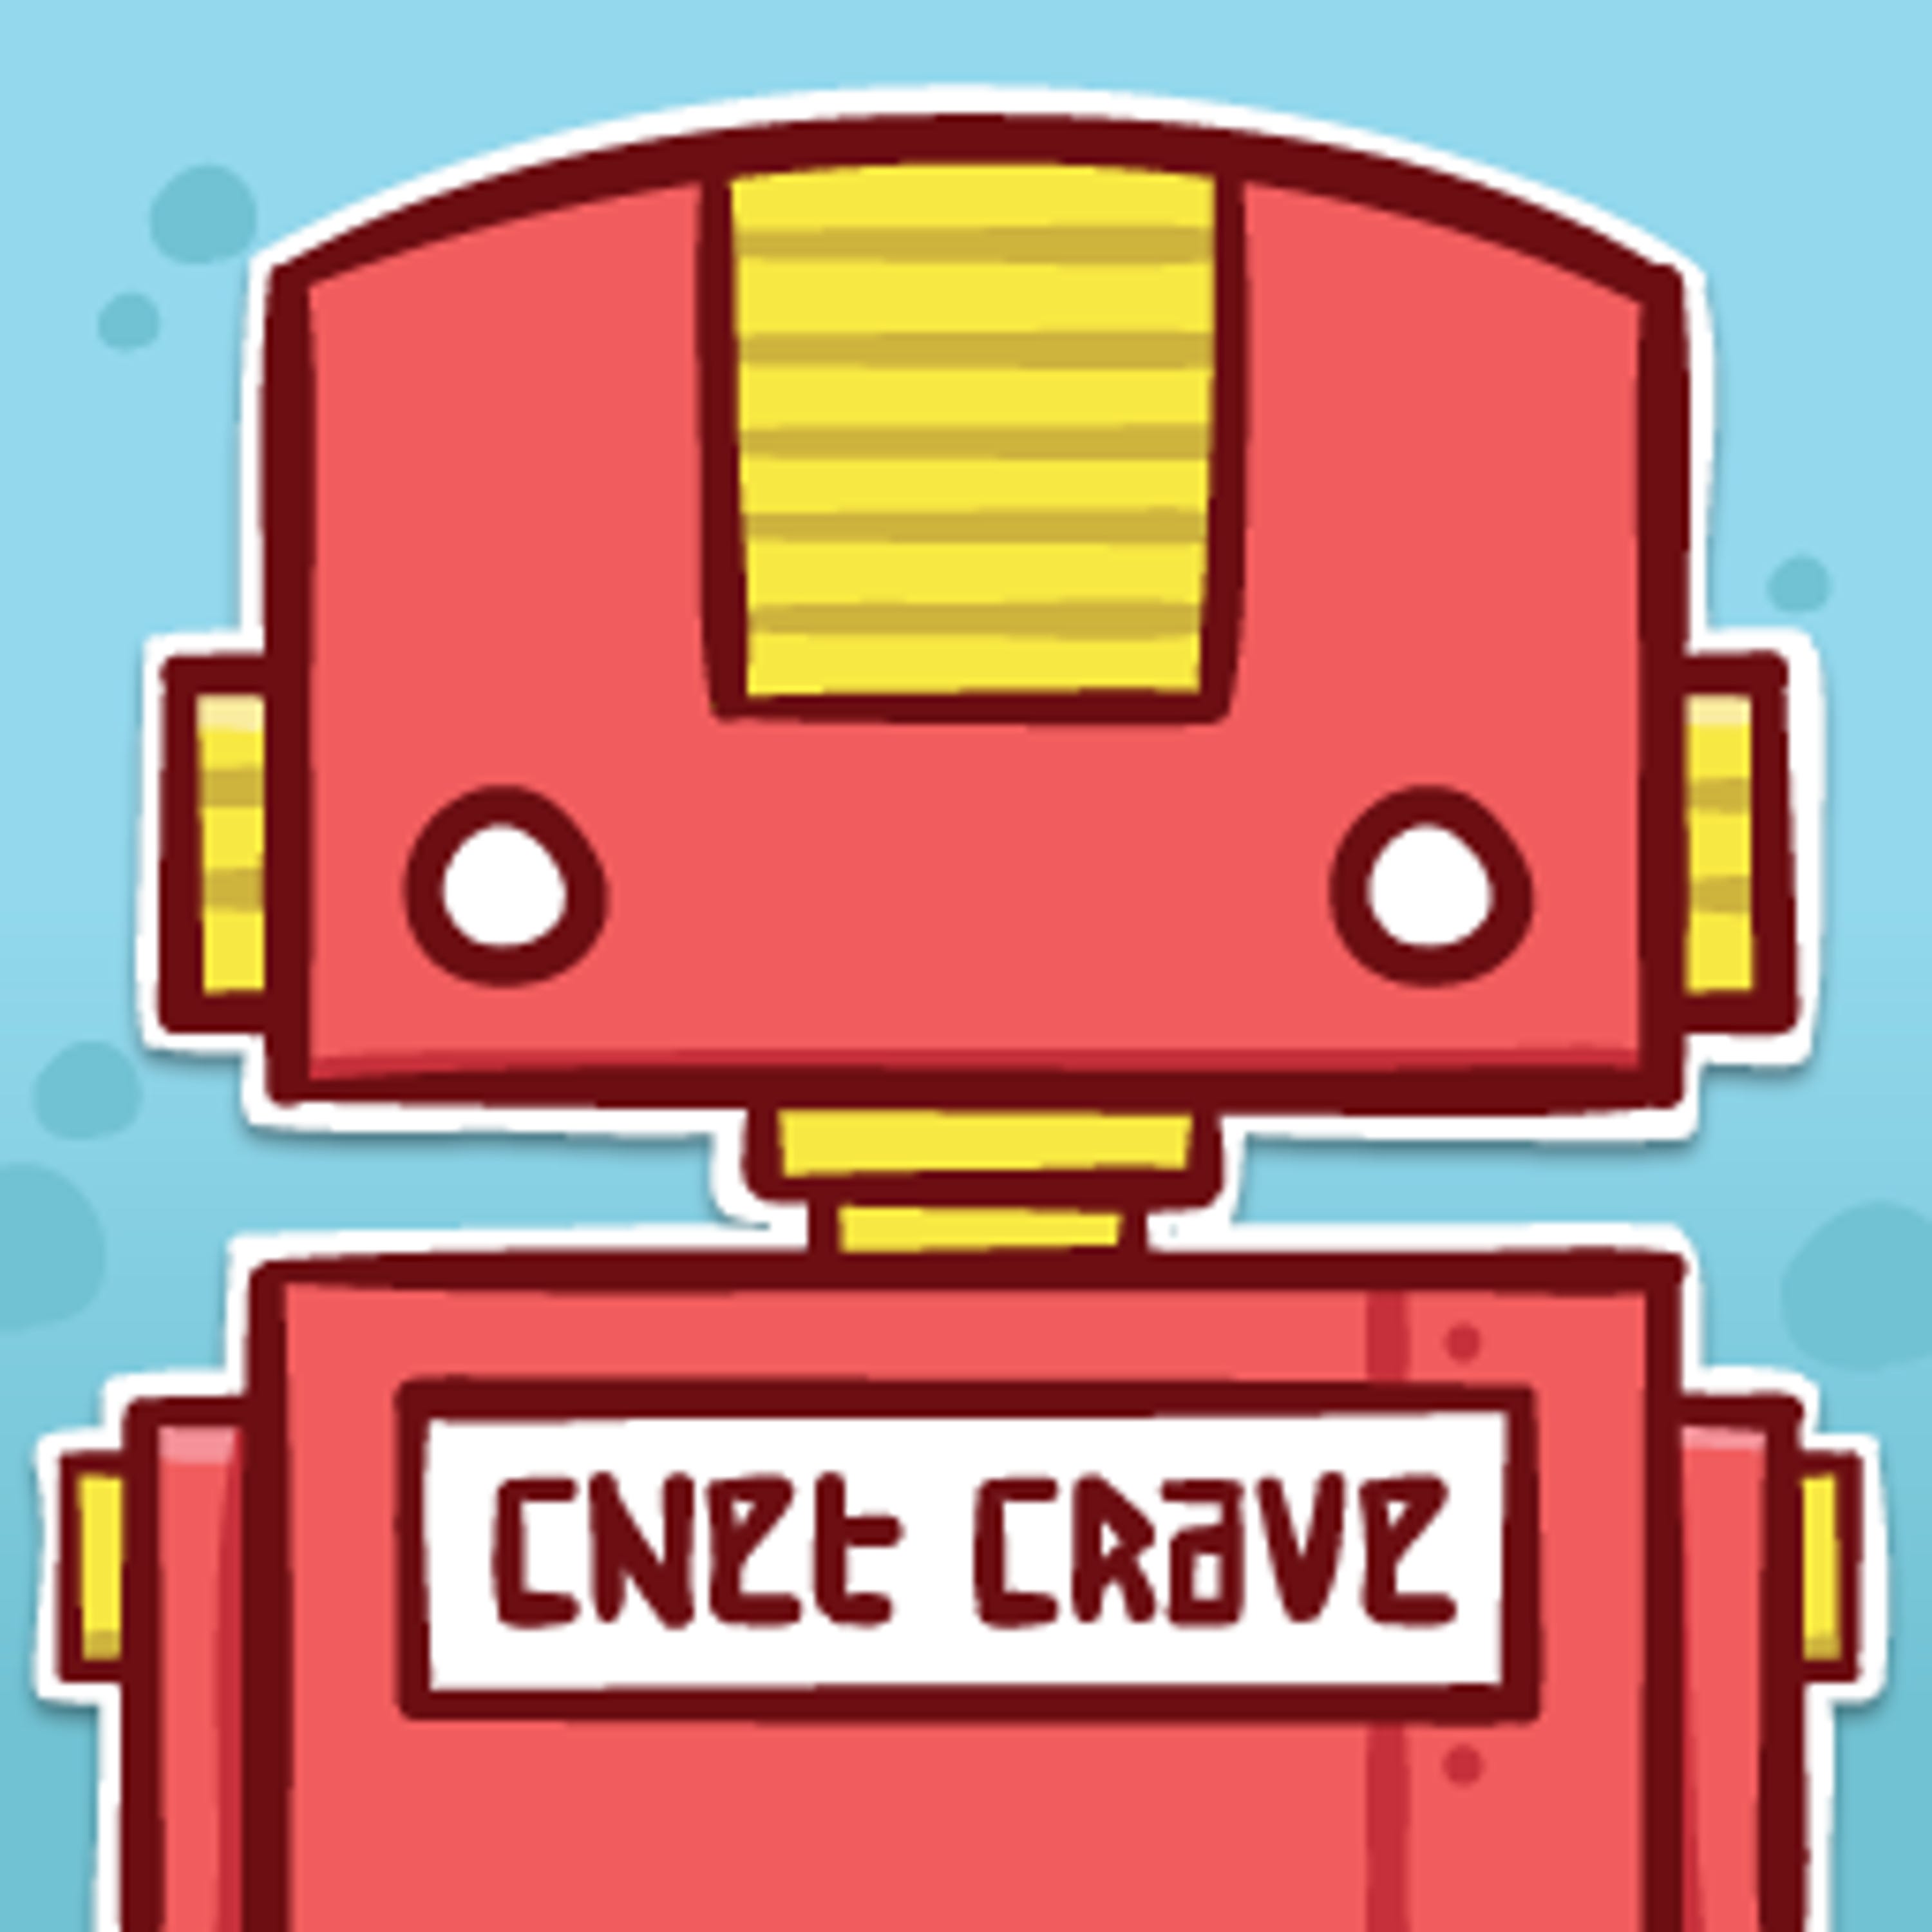 Crave (video)